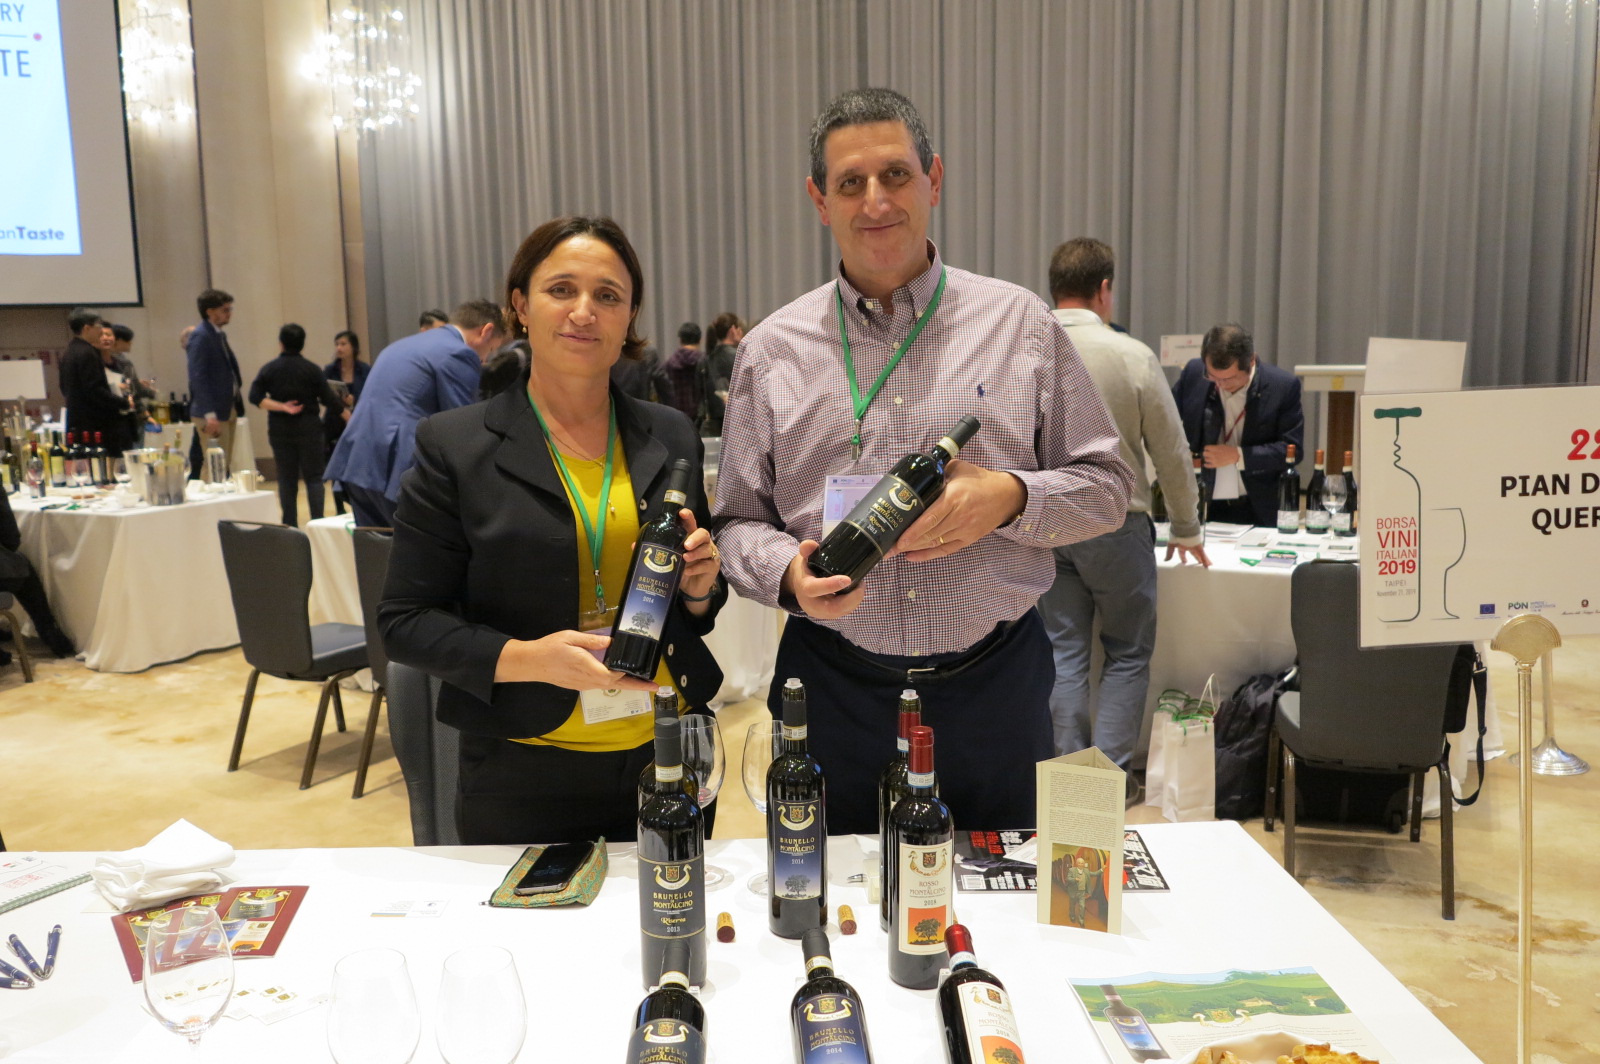 Pian delle Querci酒莊來自義大利中部托斯卡尼(Tuscany)的蒙塔奇諾(Montalcino)，以生產知名的Brunello di Montalcino(BDM)紅酒為主，目前正在尋找台灣市場經銷商。圖為少莊主Angelo Pinti(右)及夫人。